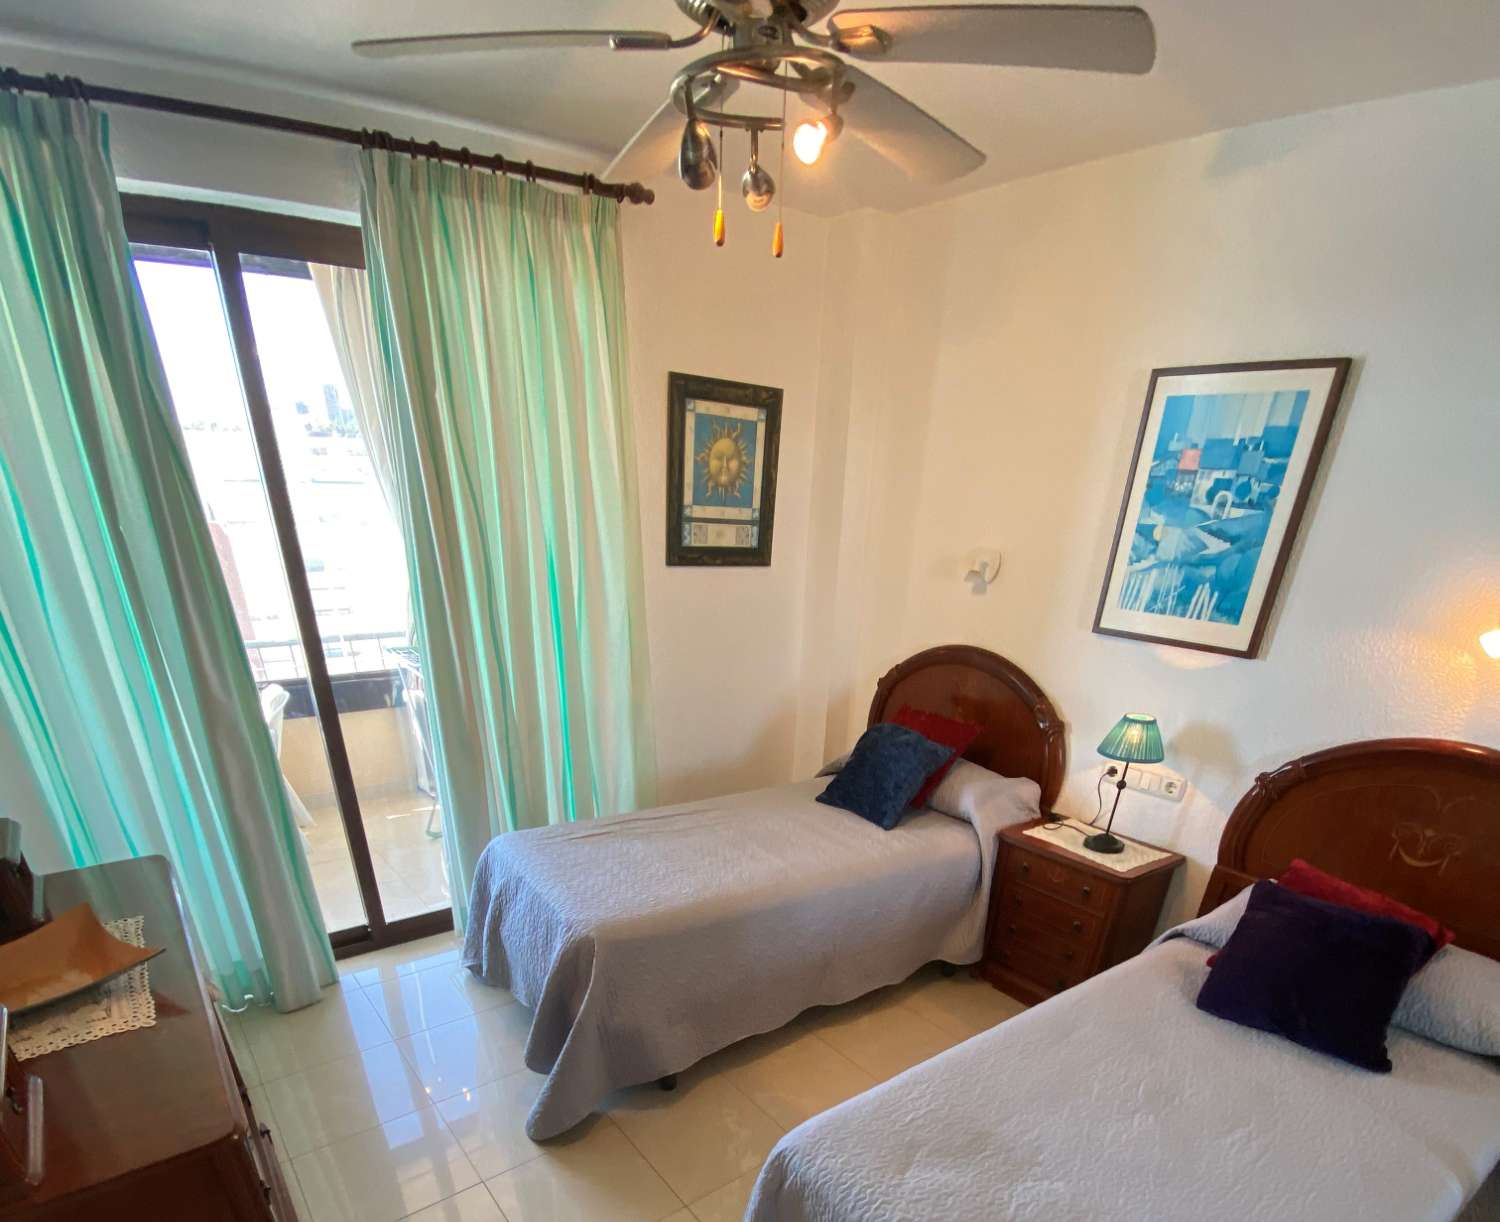 Fuengirola, 1 bedroom, panoramic views, Free Wi-Fi, swimming pool, First line beach.